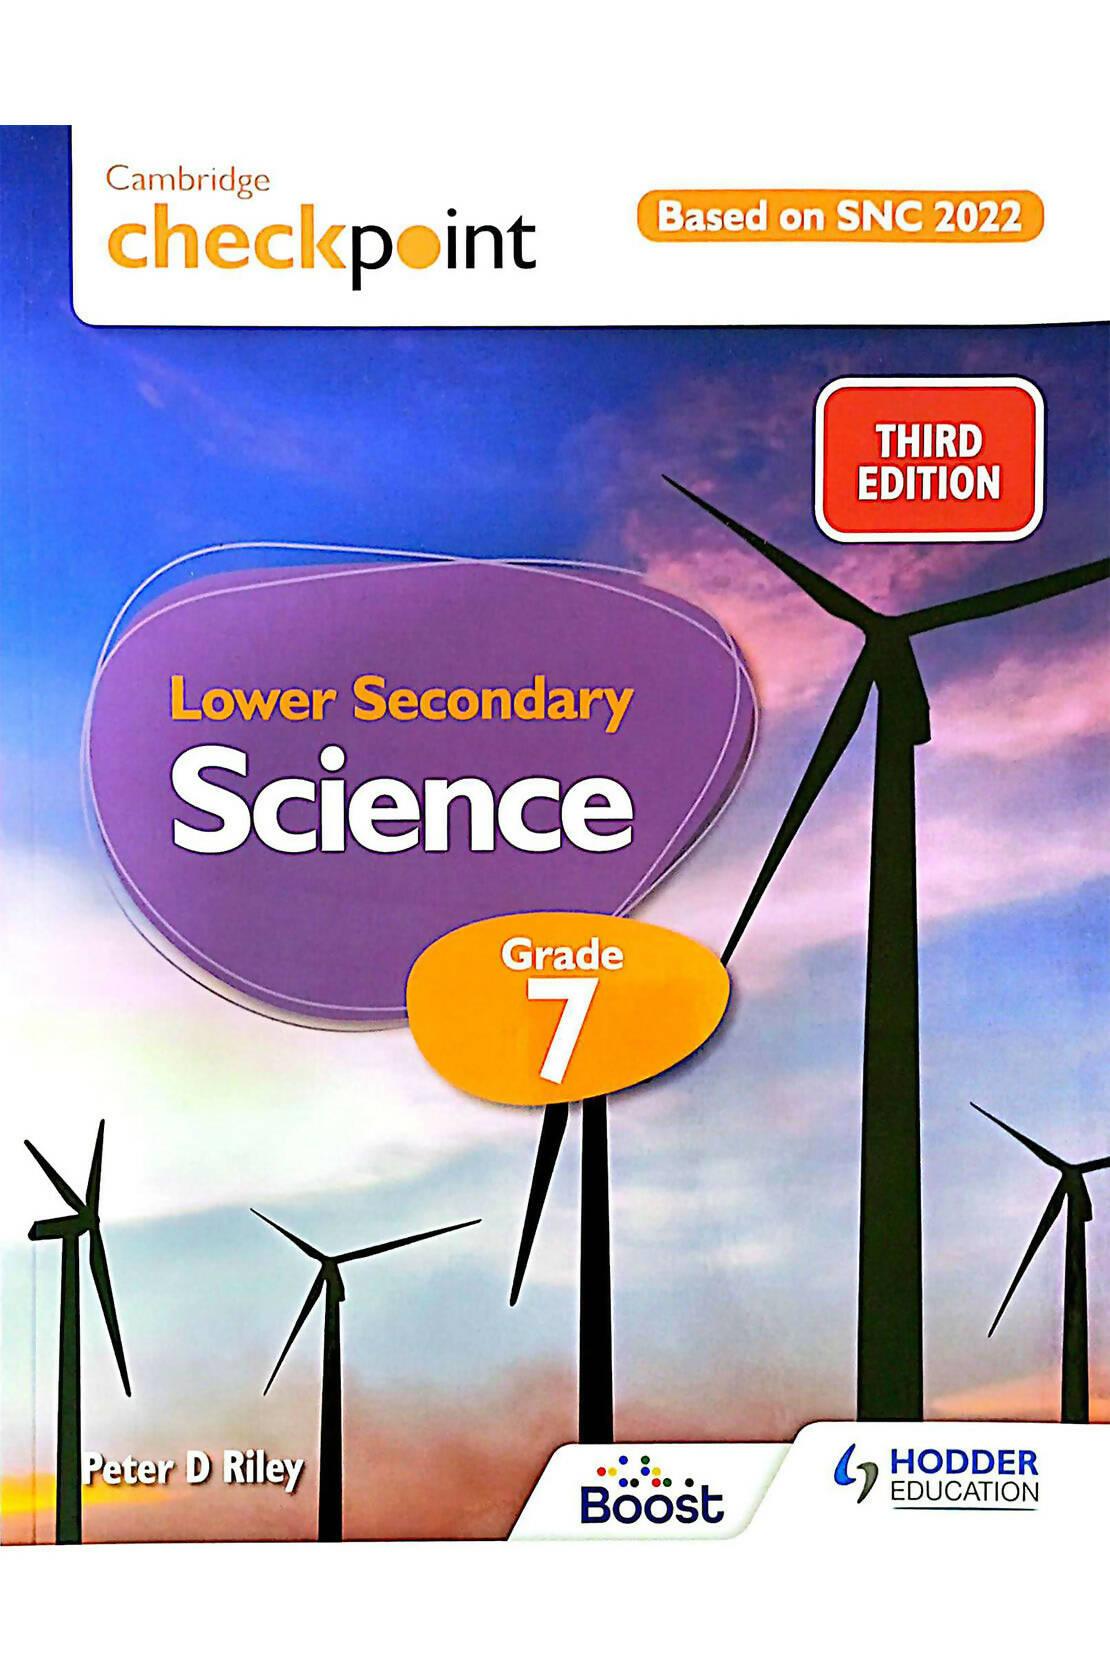 Cambridge Checkpoint Lower Secondary Science Textbook 7 (SNC Aligned, Pakistan Edition - Hodder Cambridge) - ValueBox